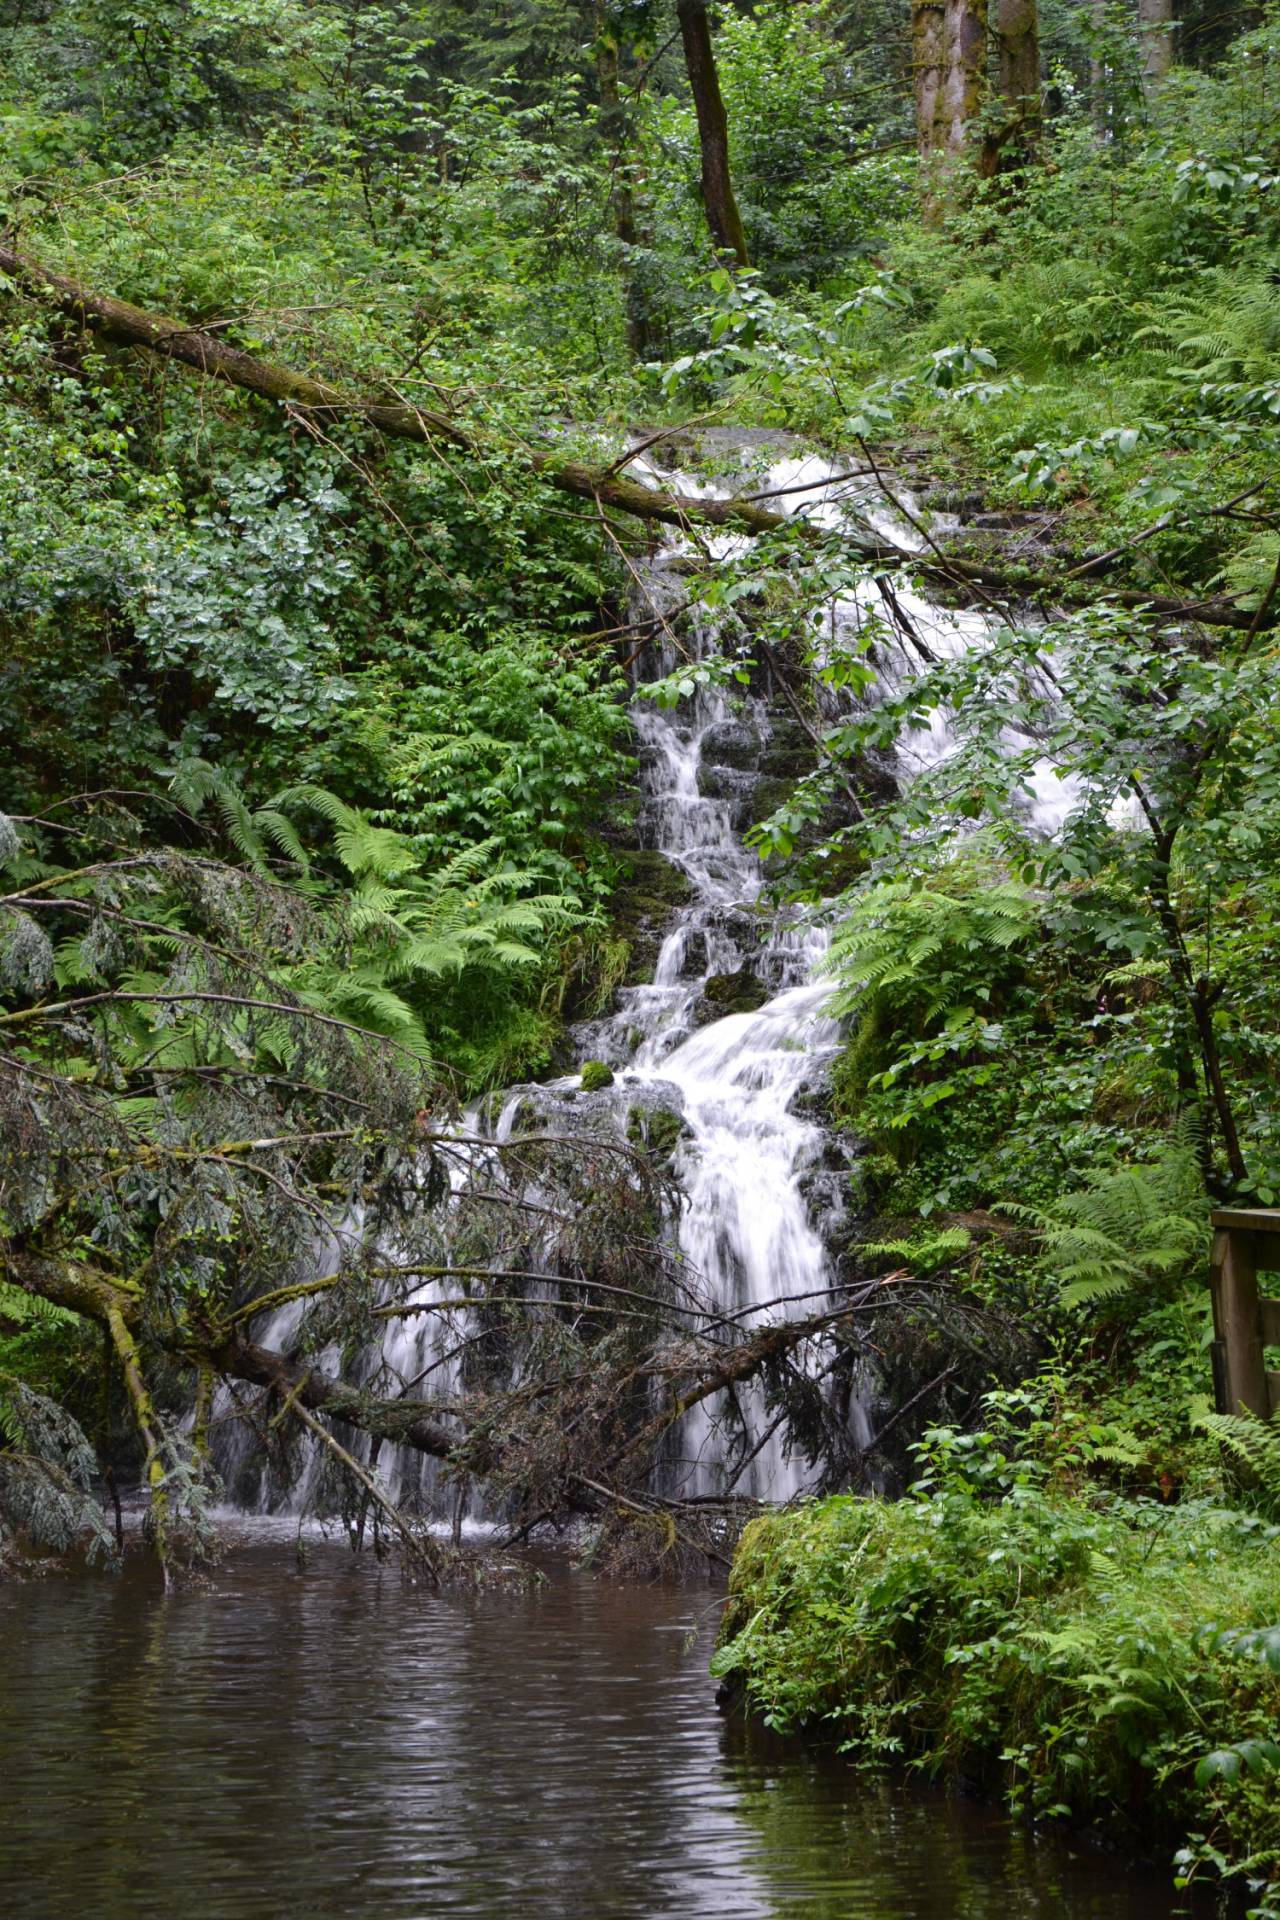 Hiking: Faymont waterfall © Sapin88 - CC BY-SA 4.0